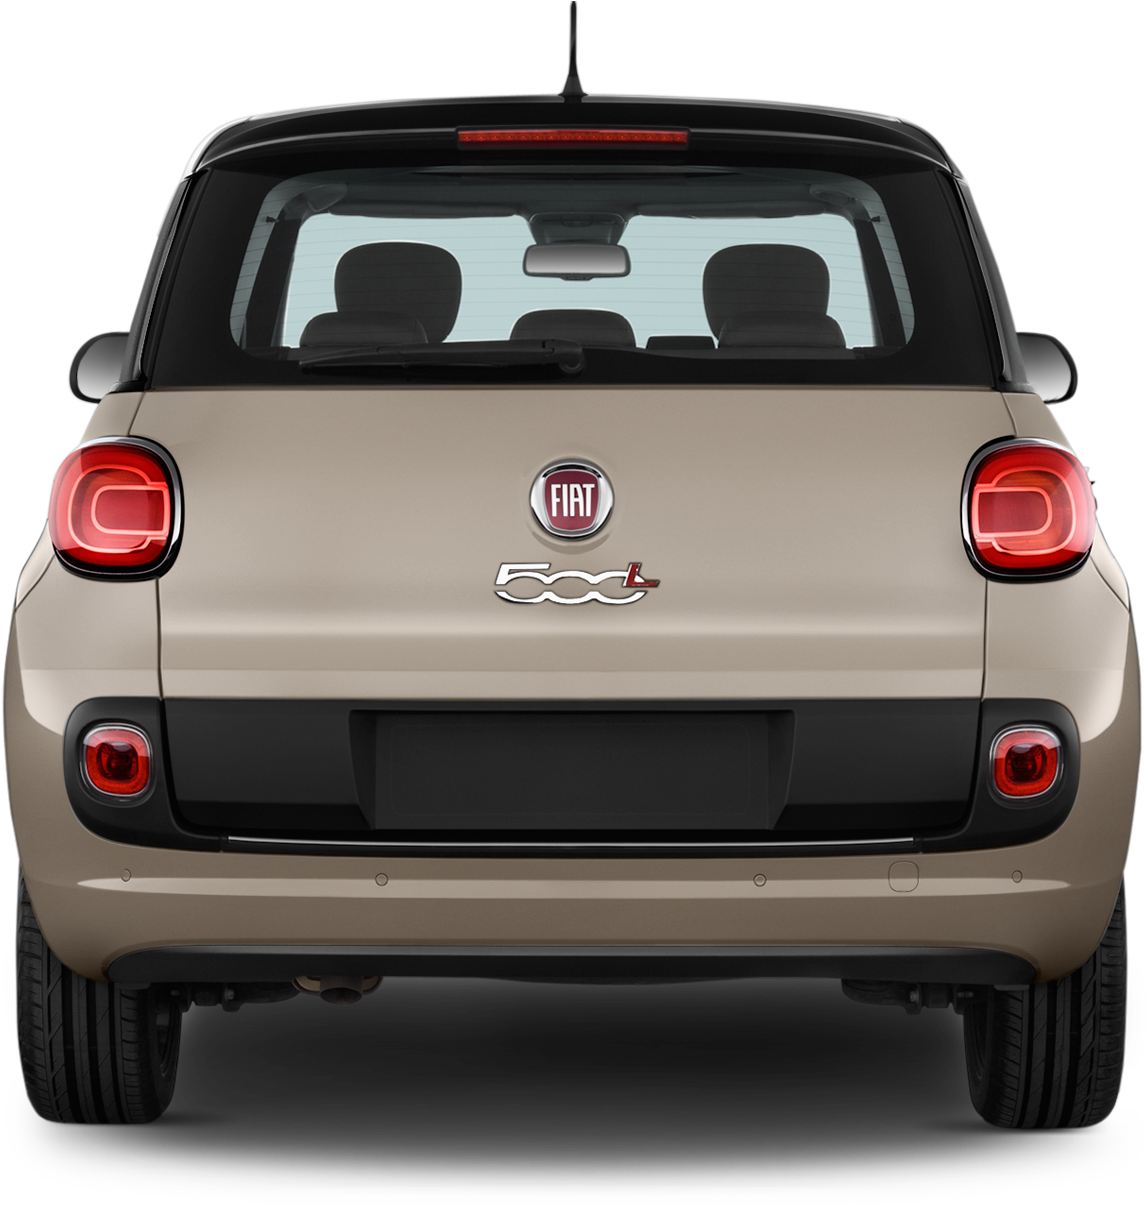 Fiat500 L Rear View PNG image